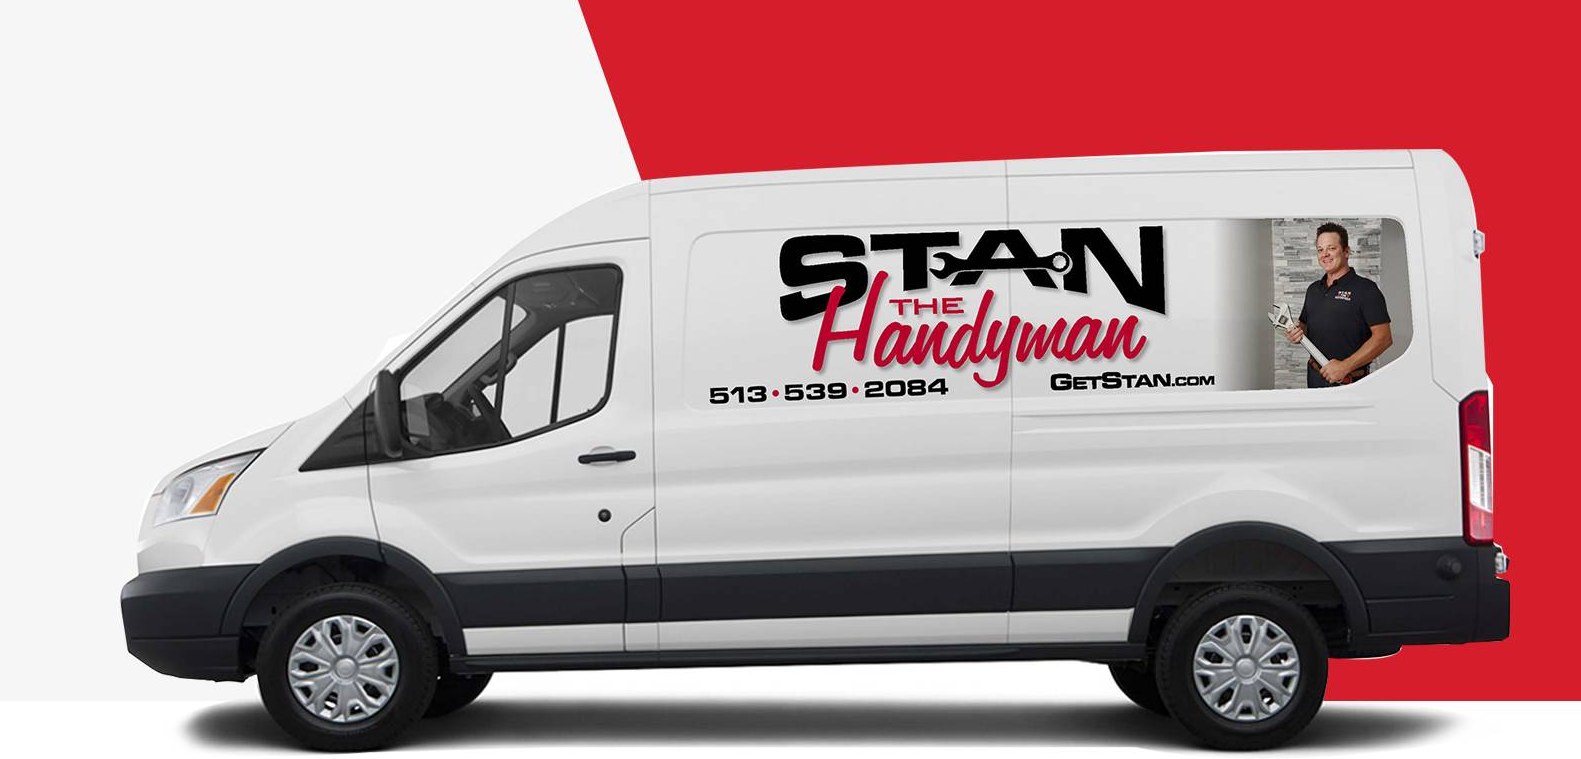 Stan - The Handyman